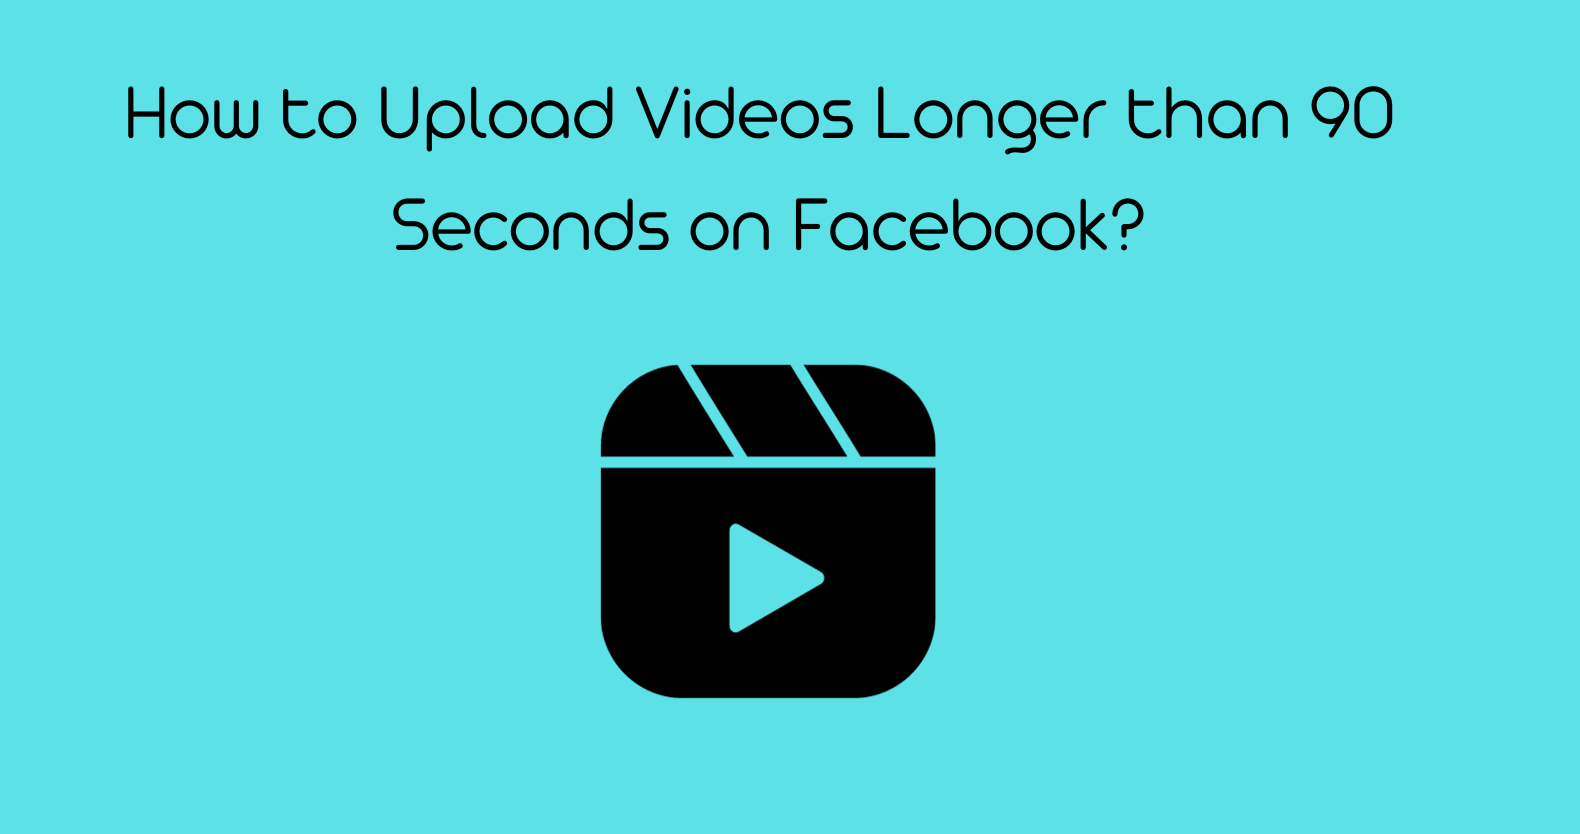 upload videos longer than 90 seconds on Facebook